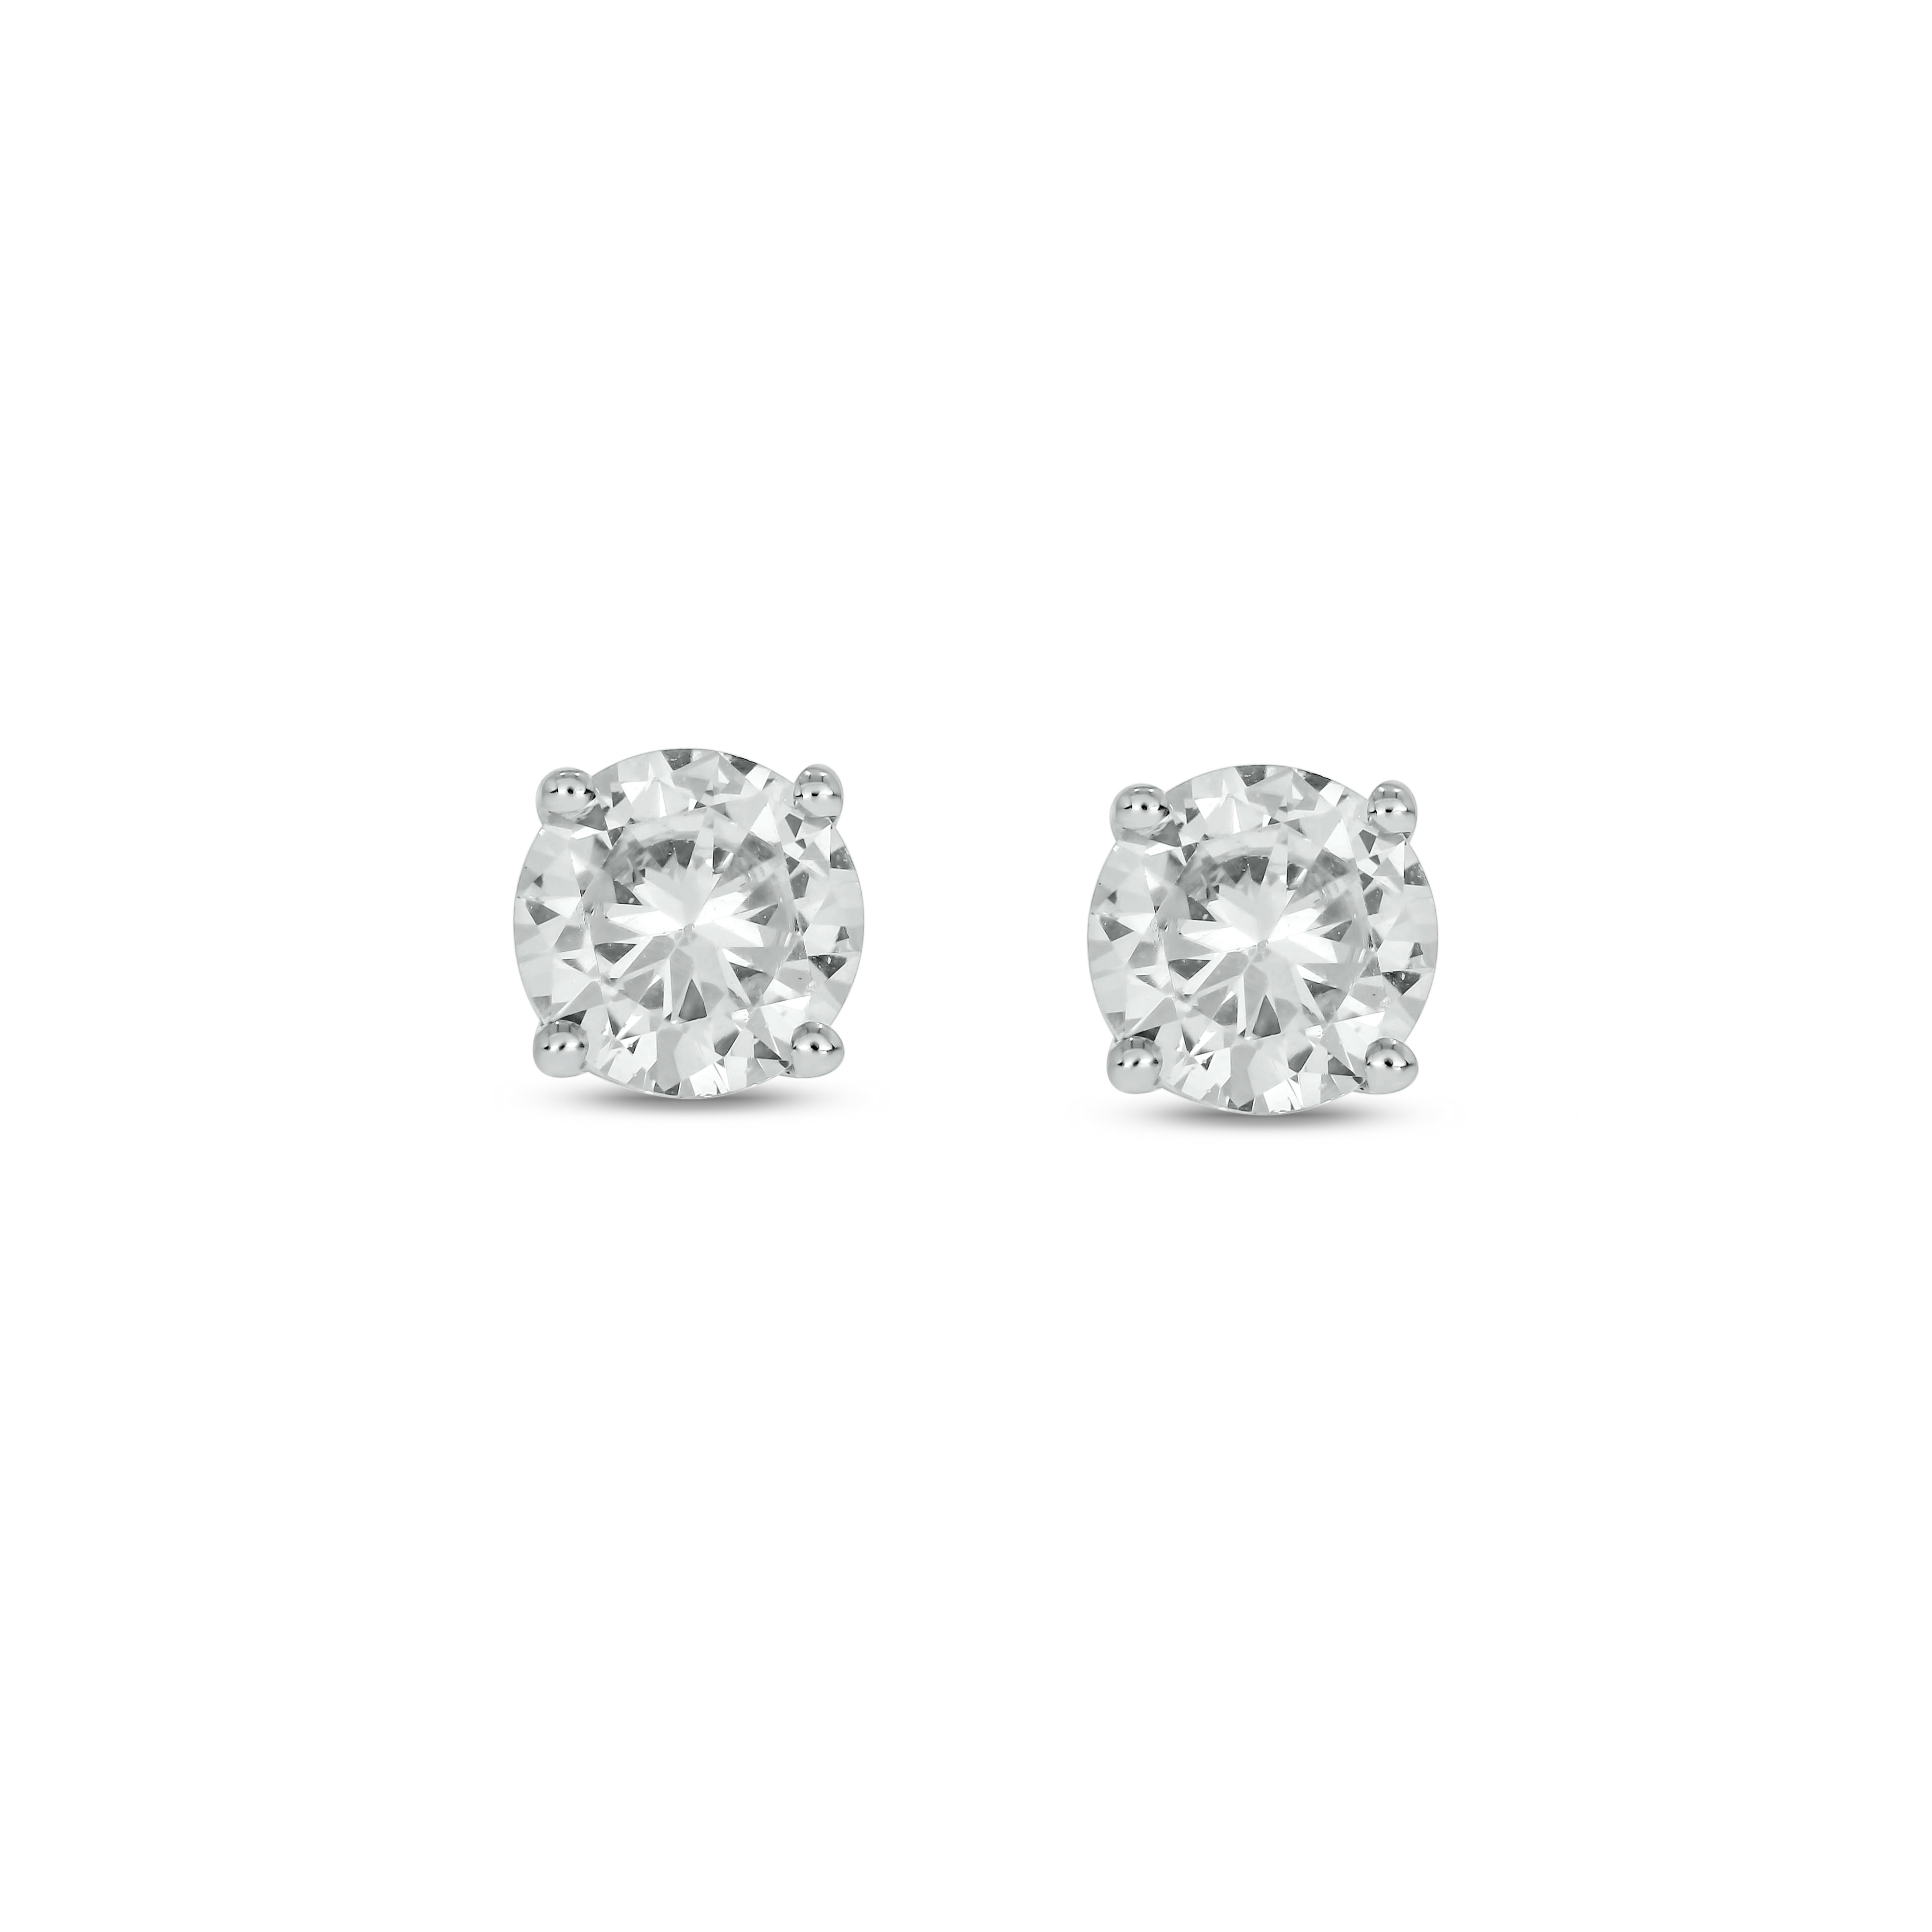 Round 2 ct Diamond Earrings in 18K White Gold | Maison Birks